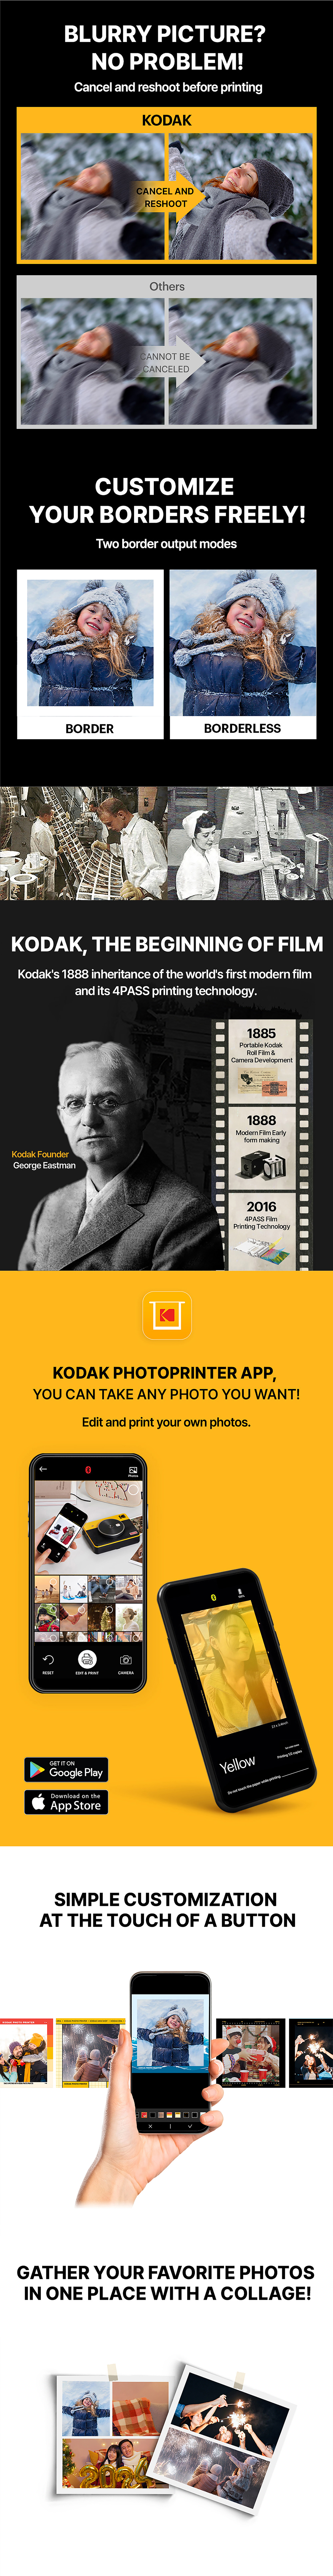 Kodak mini shot 3 with 2 cartridges!! 📸 Taken 2-3 - Depop